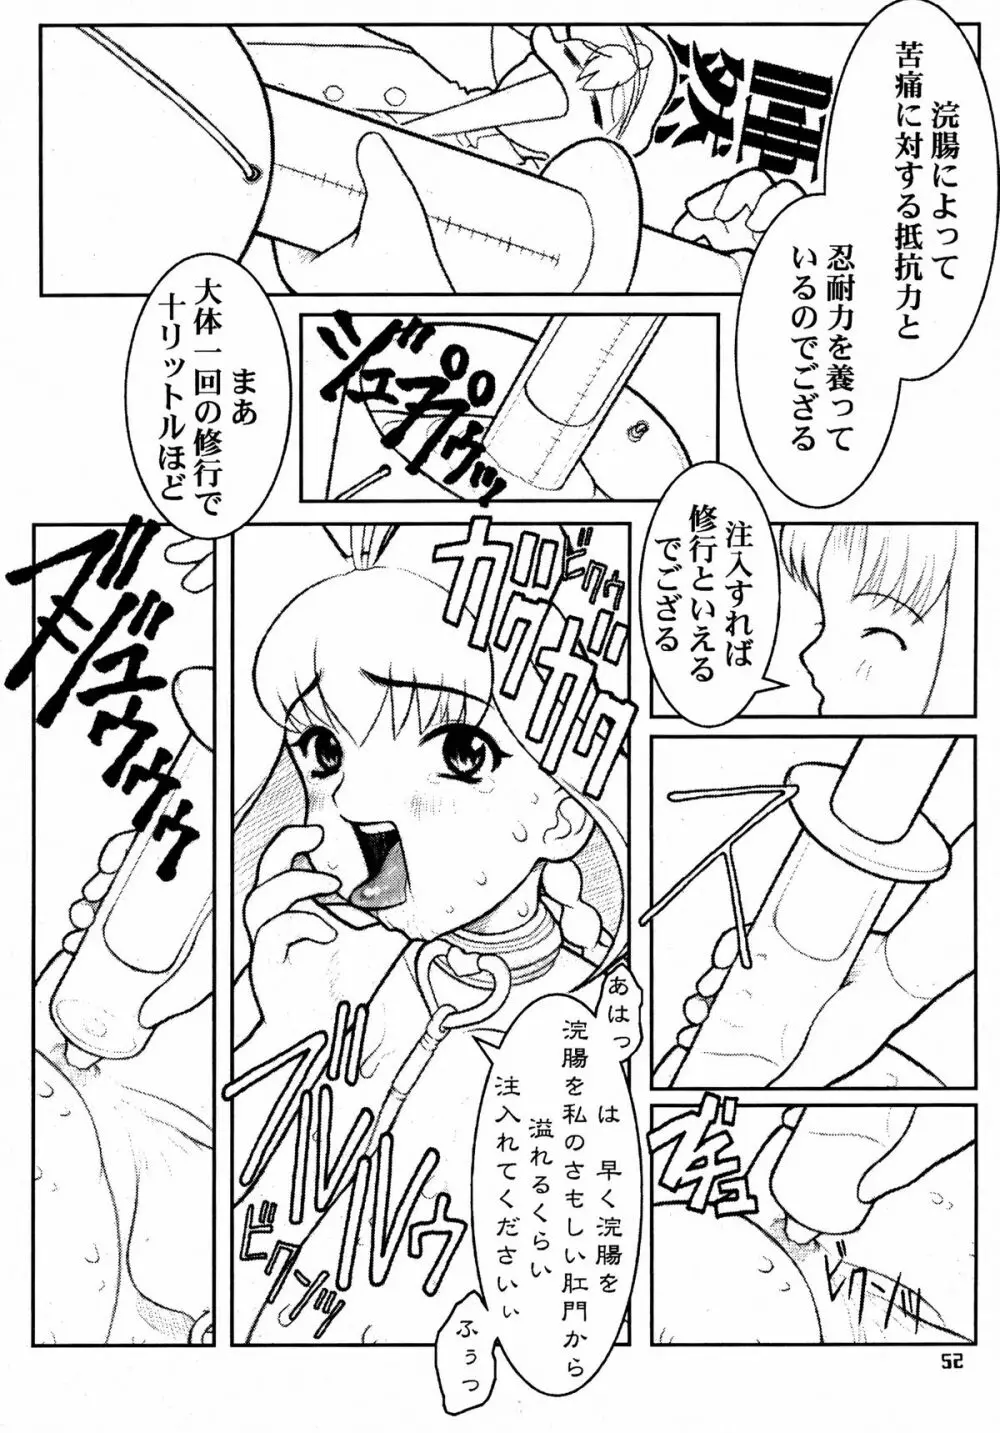 MaD ArtistS 十兵衛ちゃん - page52